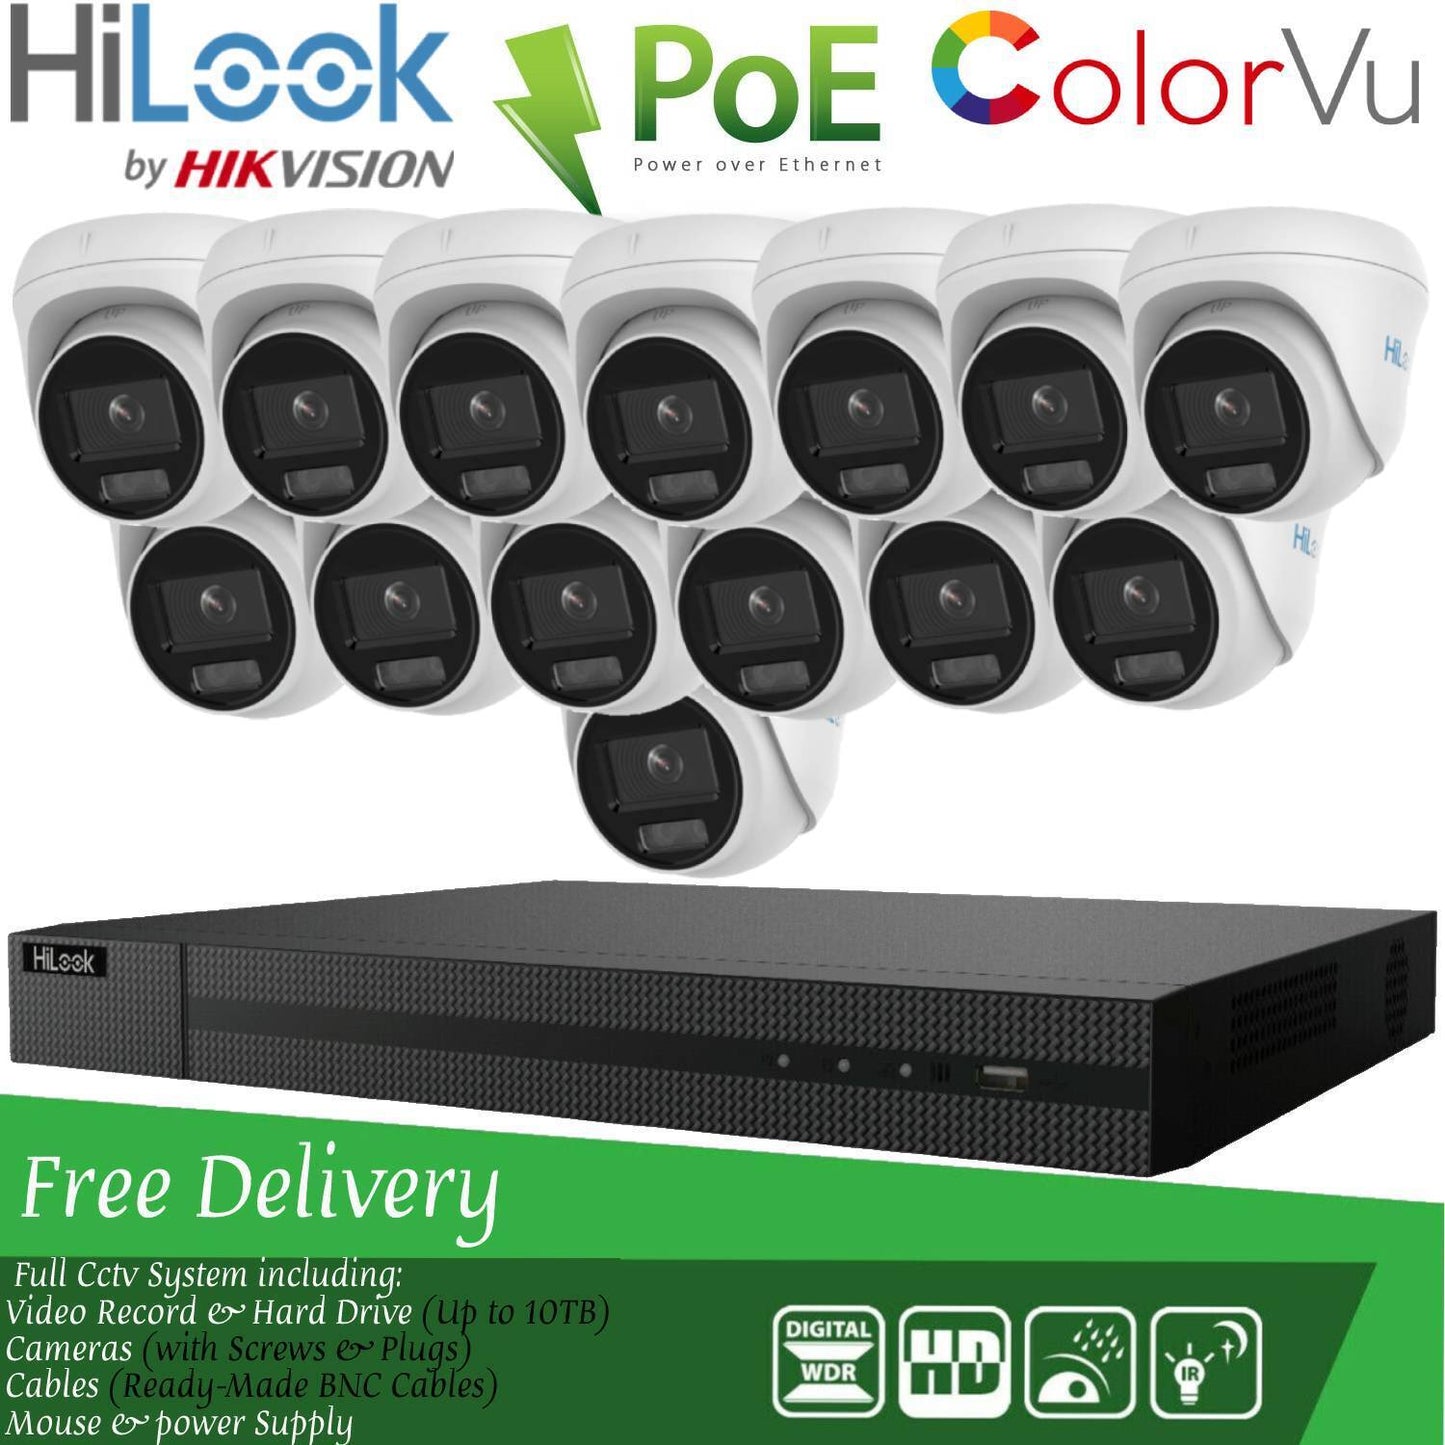 HIKVISION COLORVU POE CCTV SYSTEM IP UHD 8MP NVR 4K 5MP 24/7 COLORVU CAMERA KIT 16CH NVR 14x Cameras (white) 4TB HDD